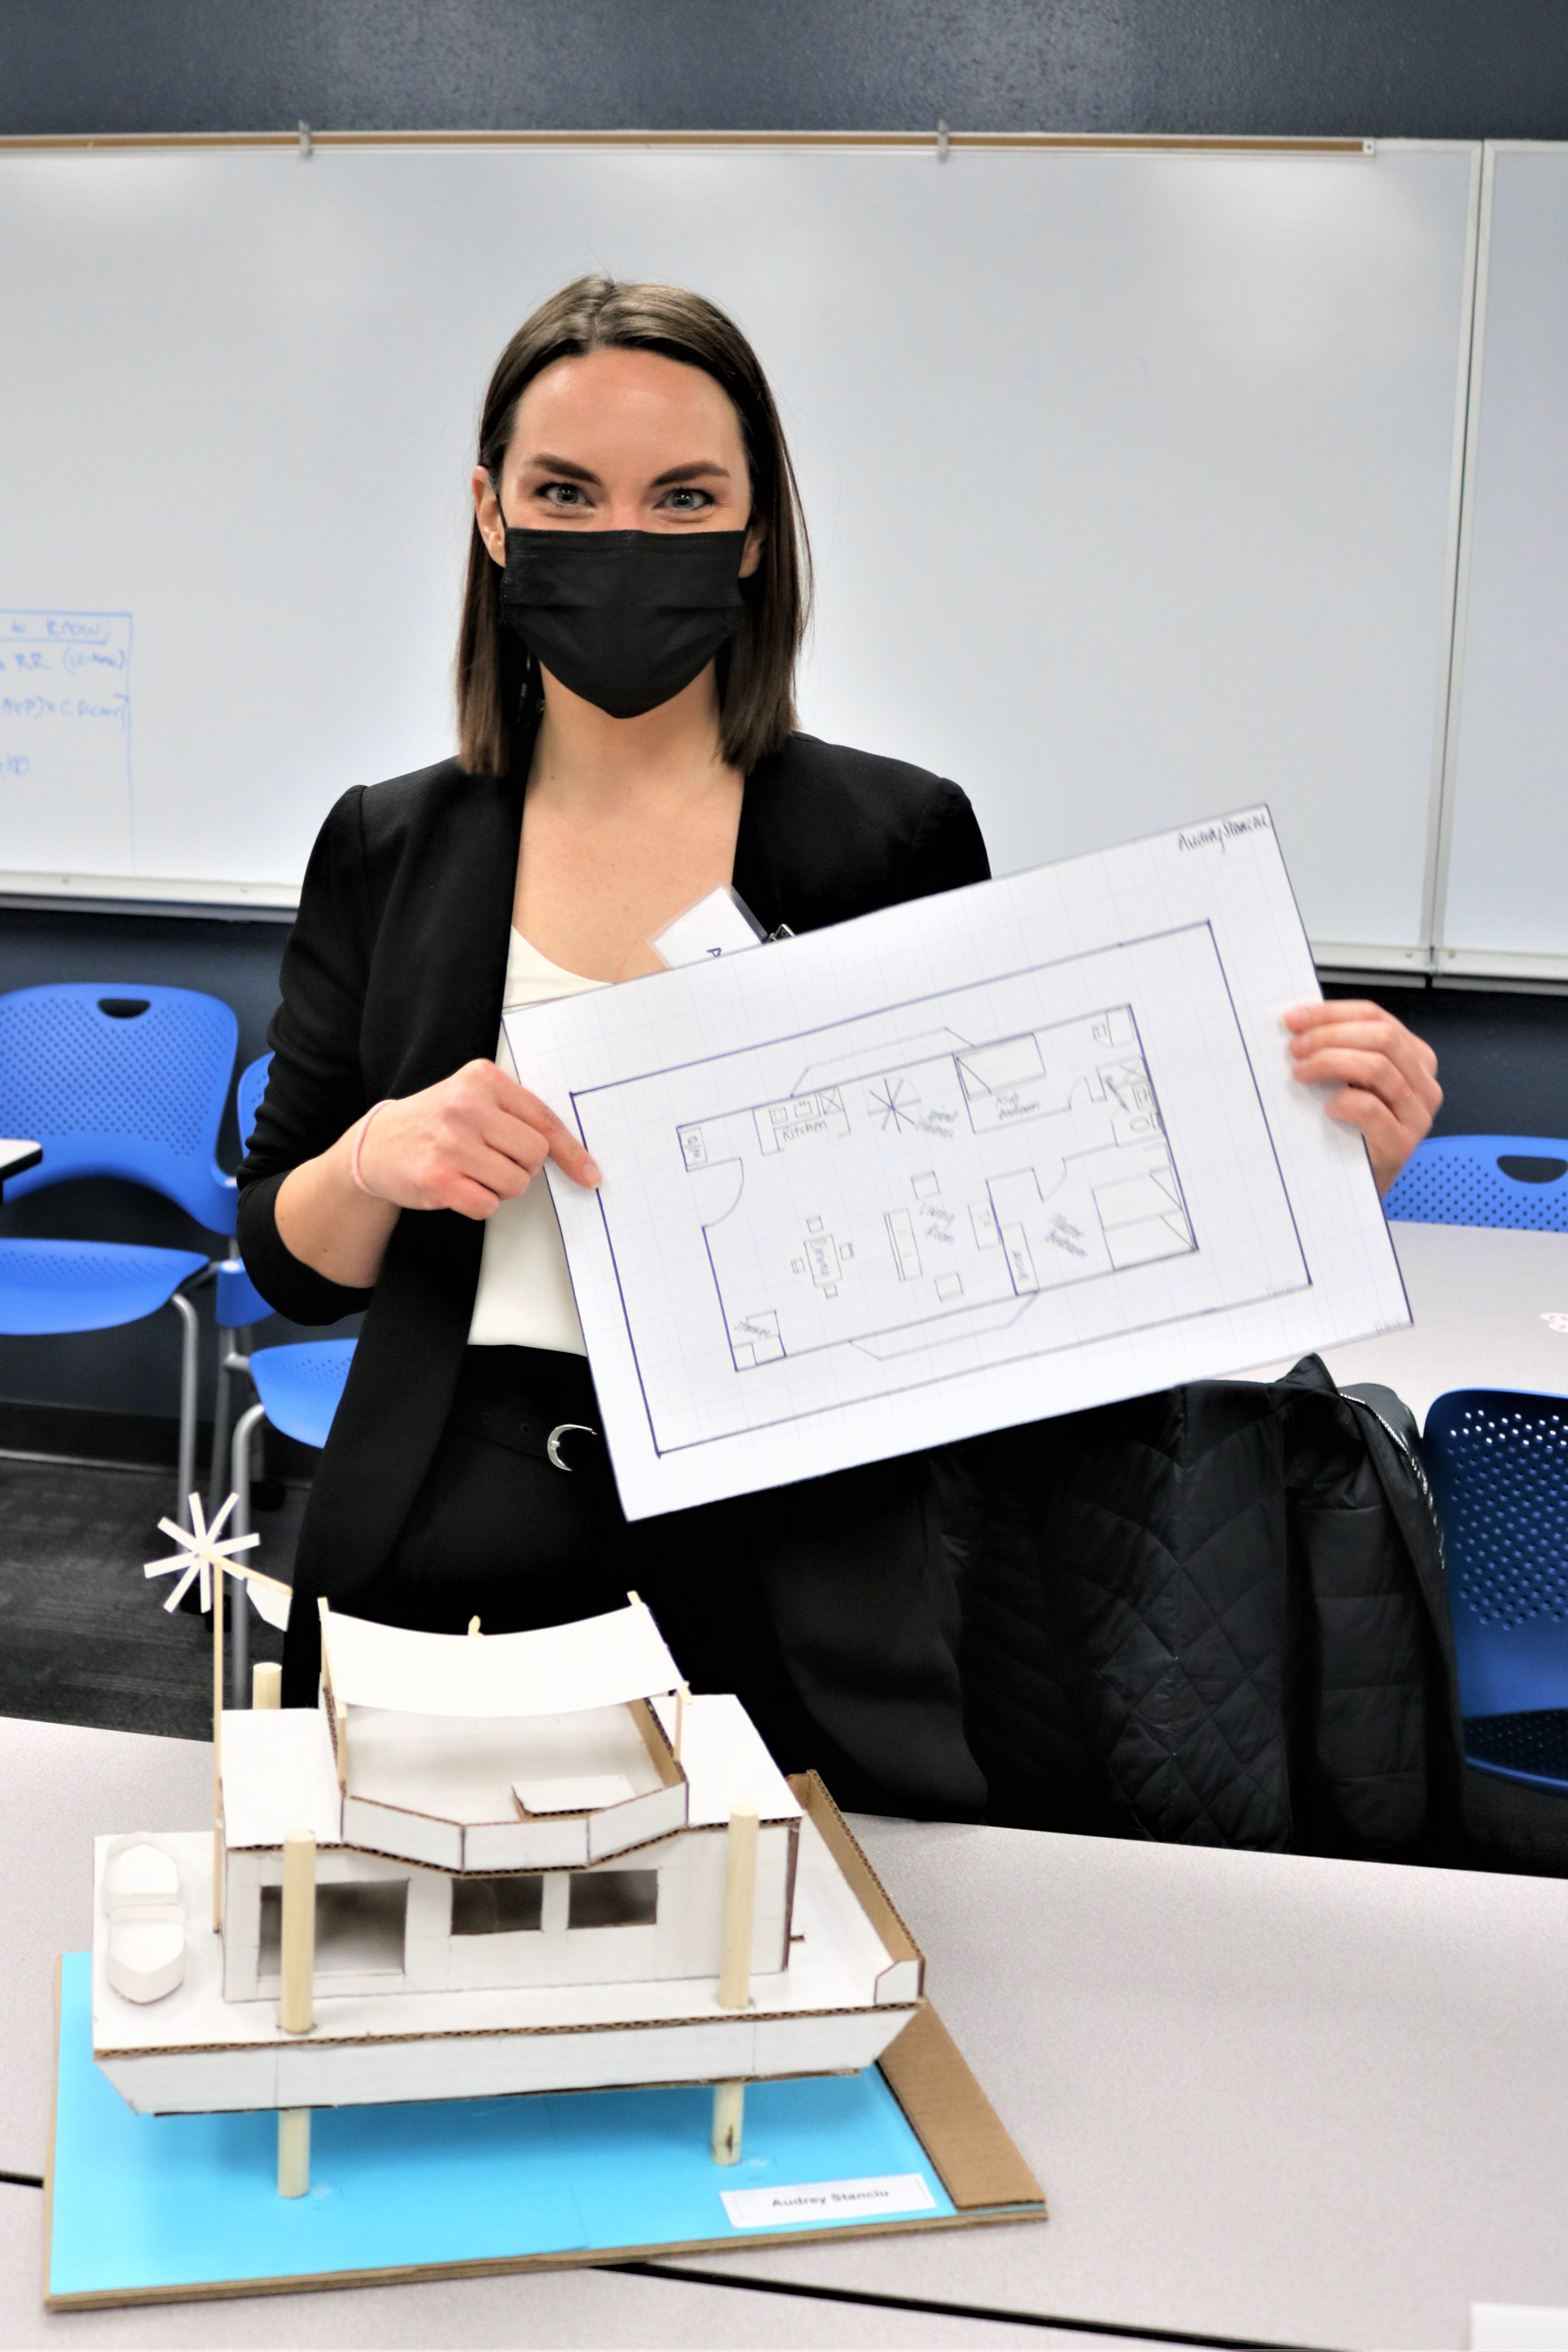 Stiancu holds paper model of design